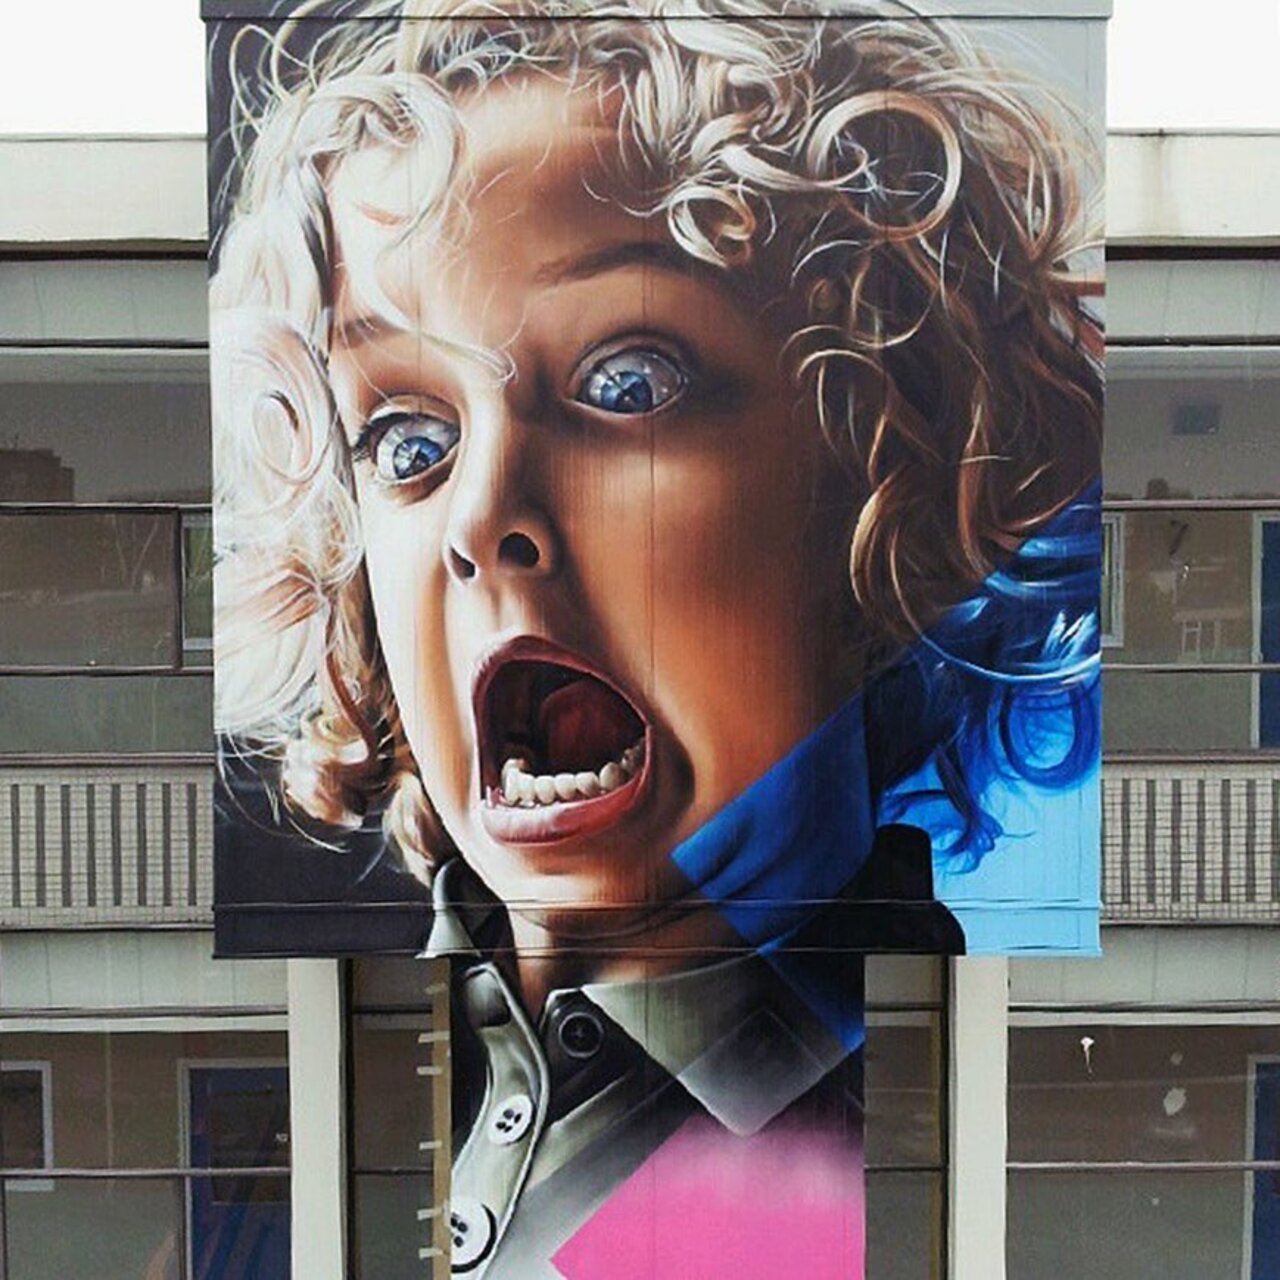 #mural by Smug & Fecks #Eindhoven #Netherlands #streetart #art #urbanart #grafitti https://t.co/pi6gHrdOH8